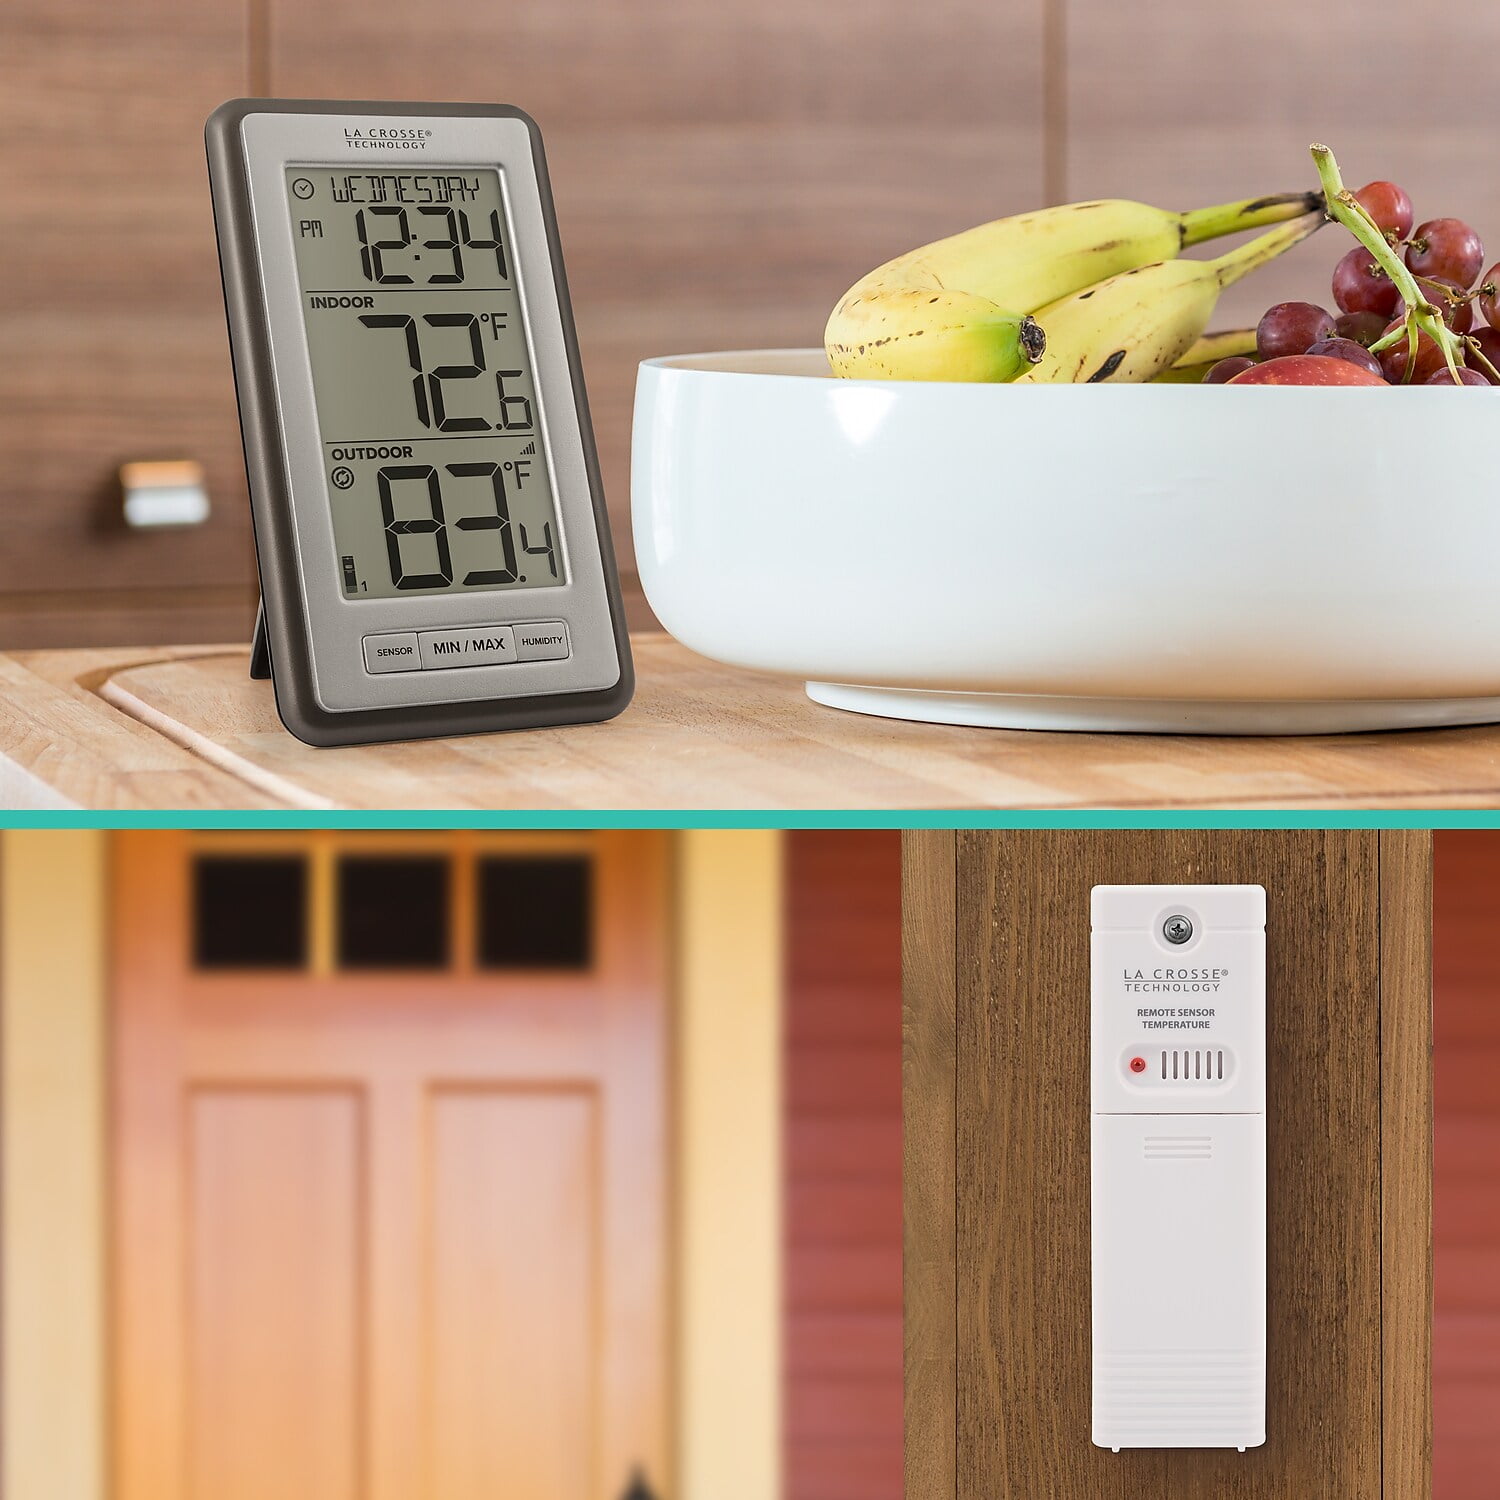 La Crosse Technology Wireless Digital Thermometer with Indoor Humidity  (WS-9160U-IT) WS-9160U-IT-CBP 